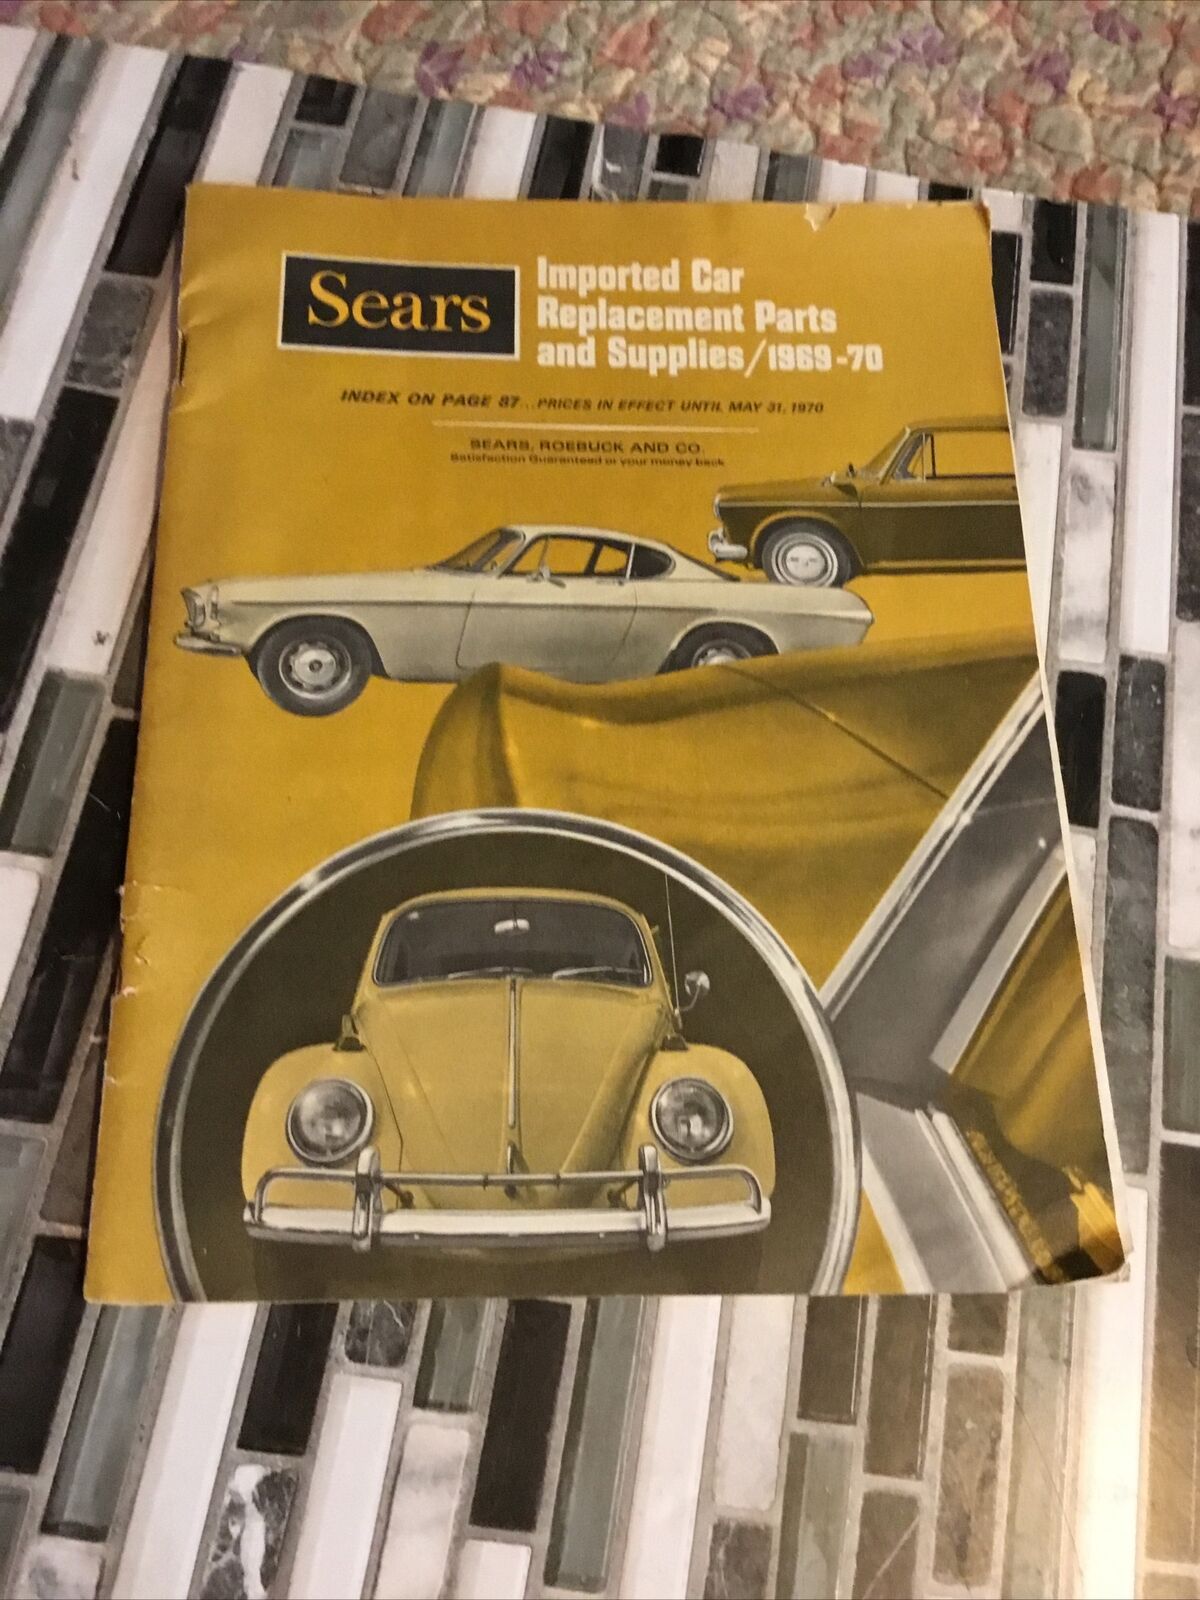 SEARS 1969-70 IMPORTED CAR REPLACEMENT PARTS SUPPLIES CATALOG VW PORSCHE ETC